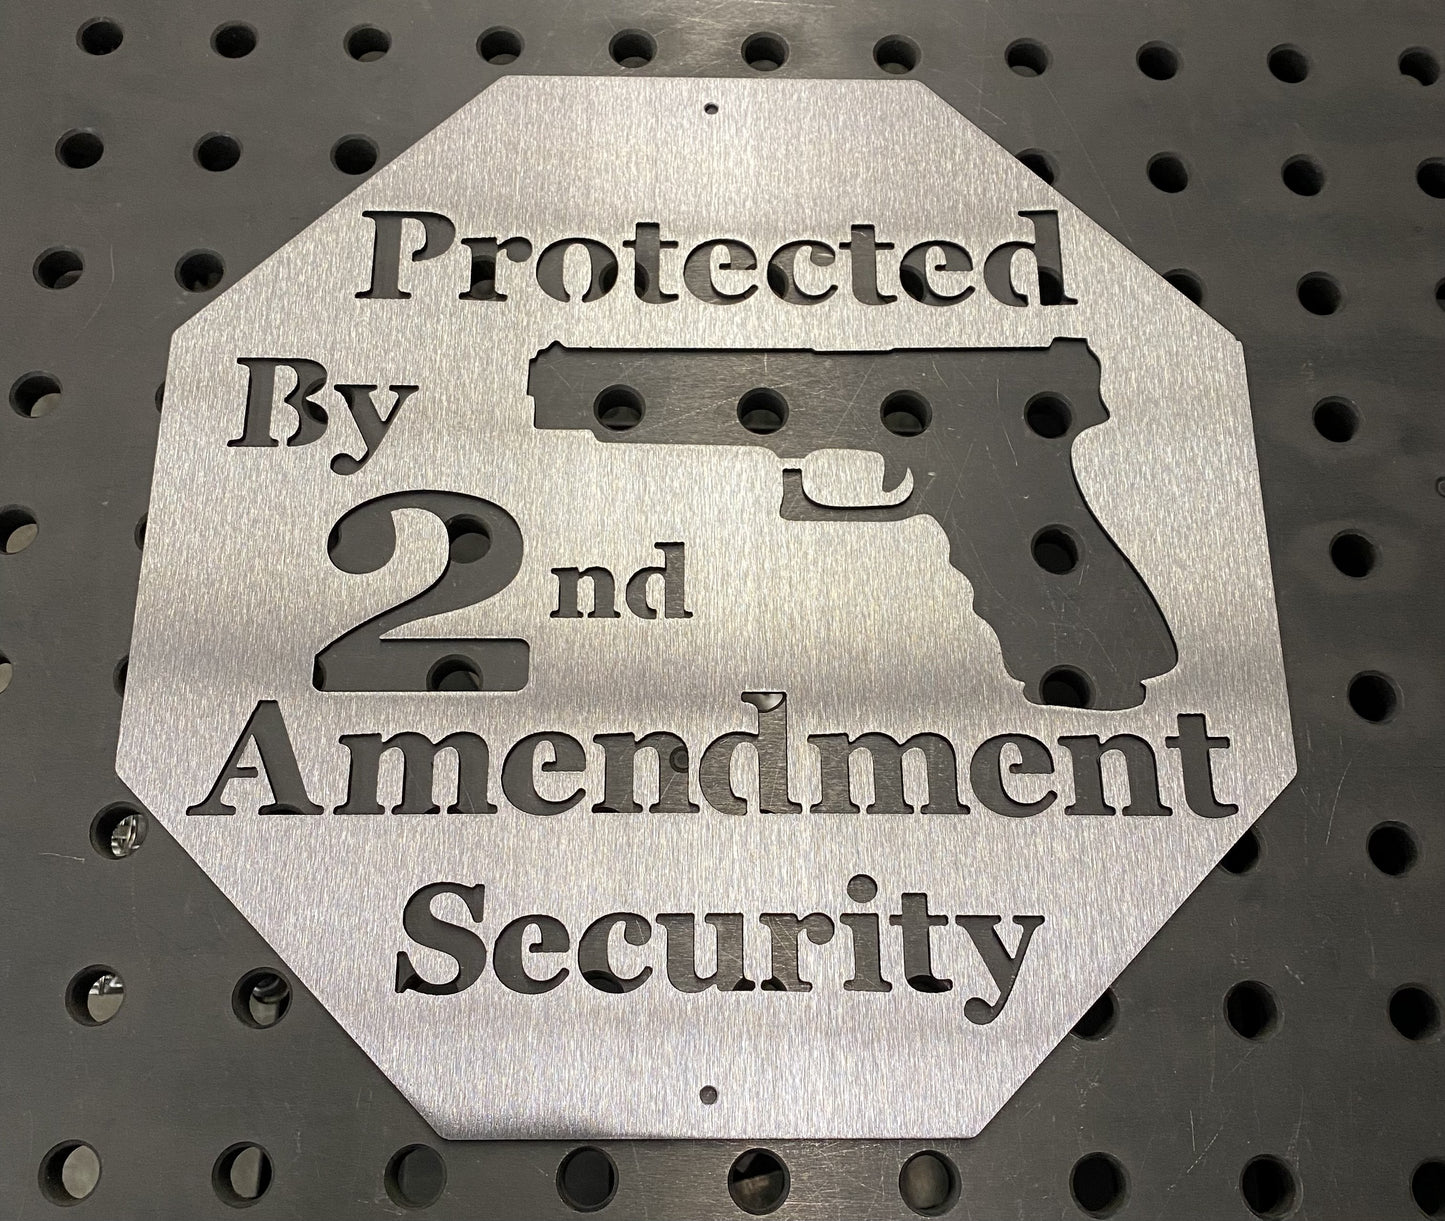 Protected by 2nd amendment security gun rights gun sign man cave metal art security sign yard sign